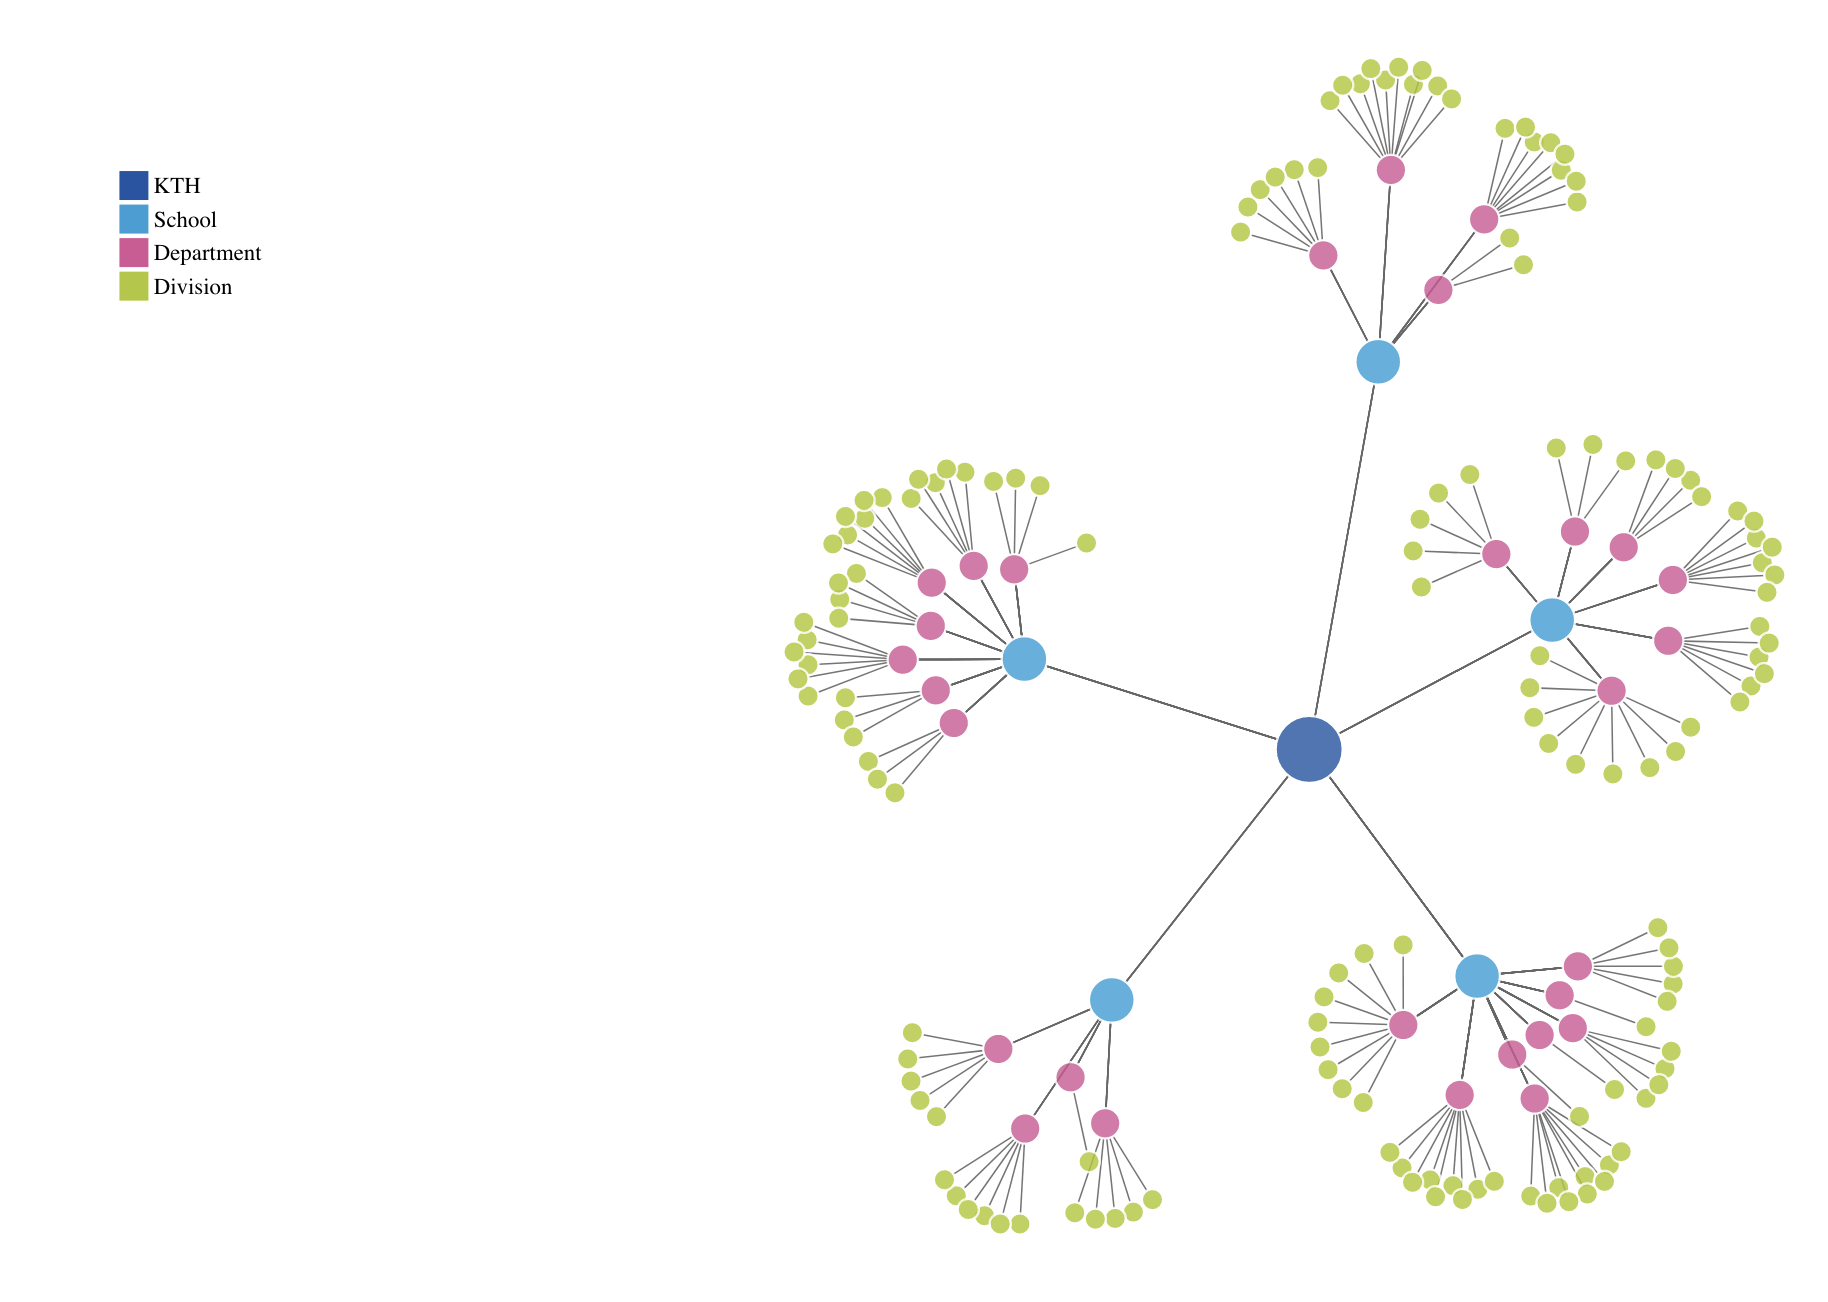 Network illustration from ABM